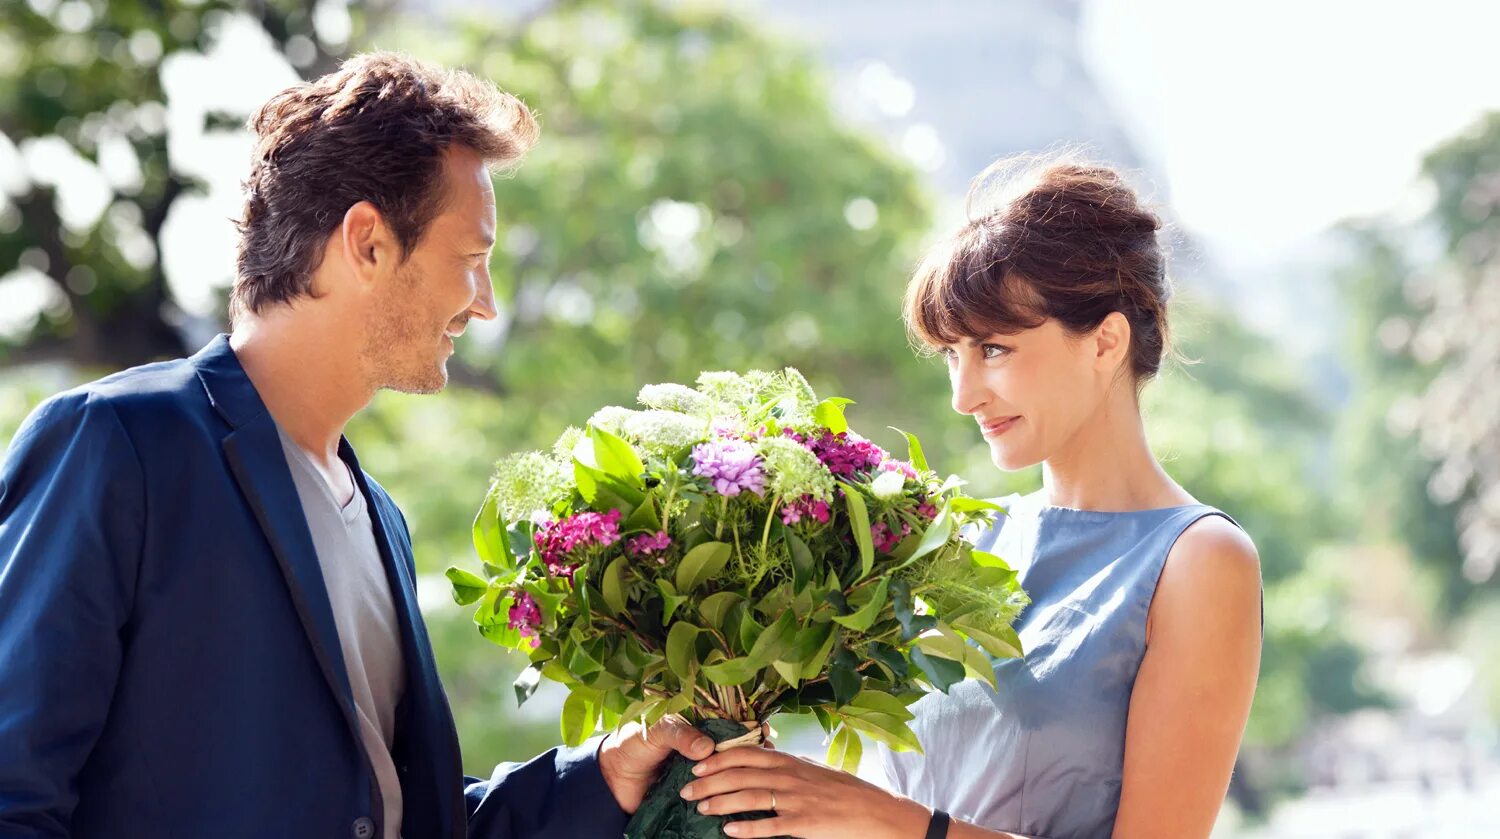 Пришла на свидание видео. Парень дарит девушке цветы. Мужчина дарит цветы женщине. Мужчина дарит букет цветов. Парень даёт девушке цветы.